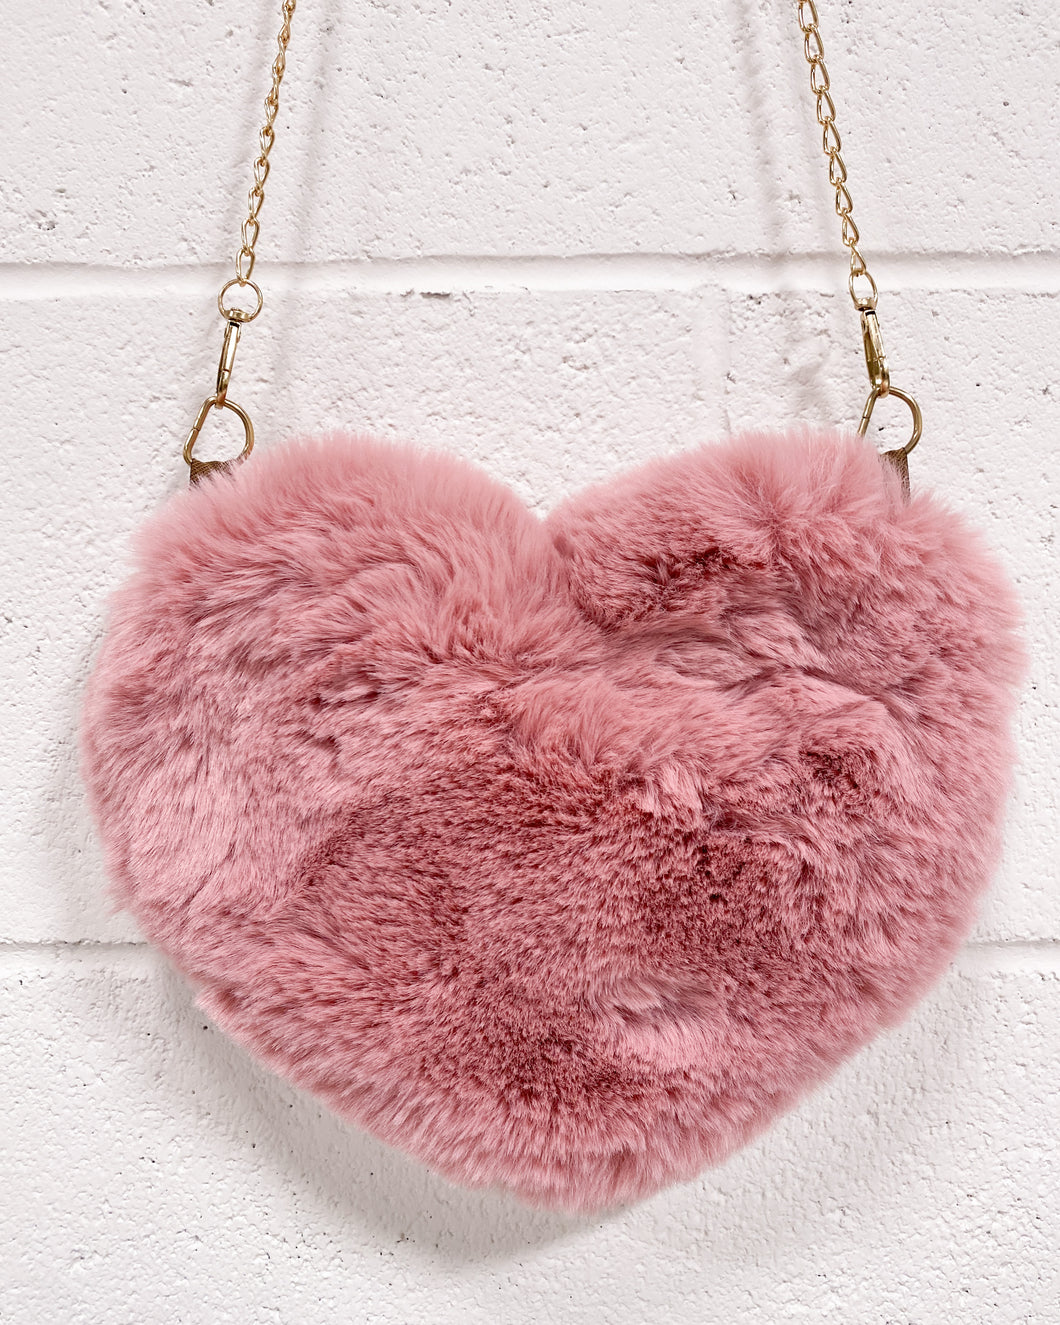 Fuzzy Heart Shaped Pink Purse